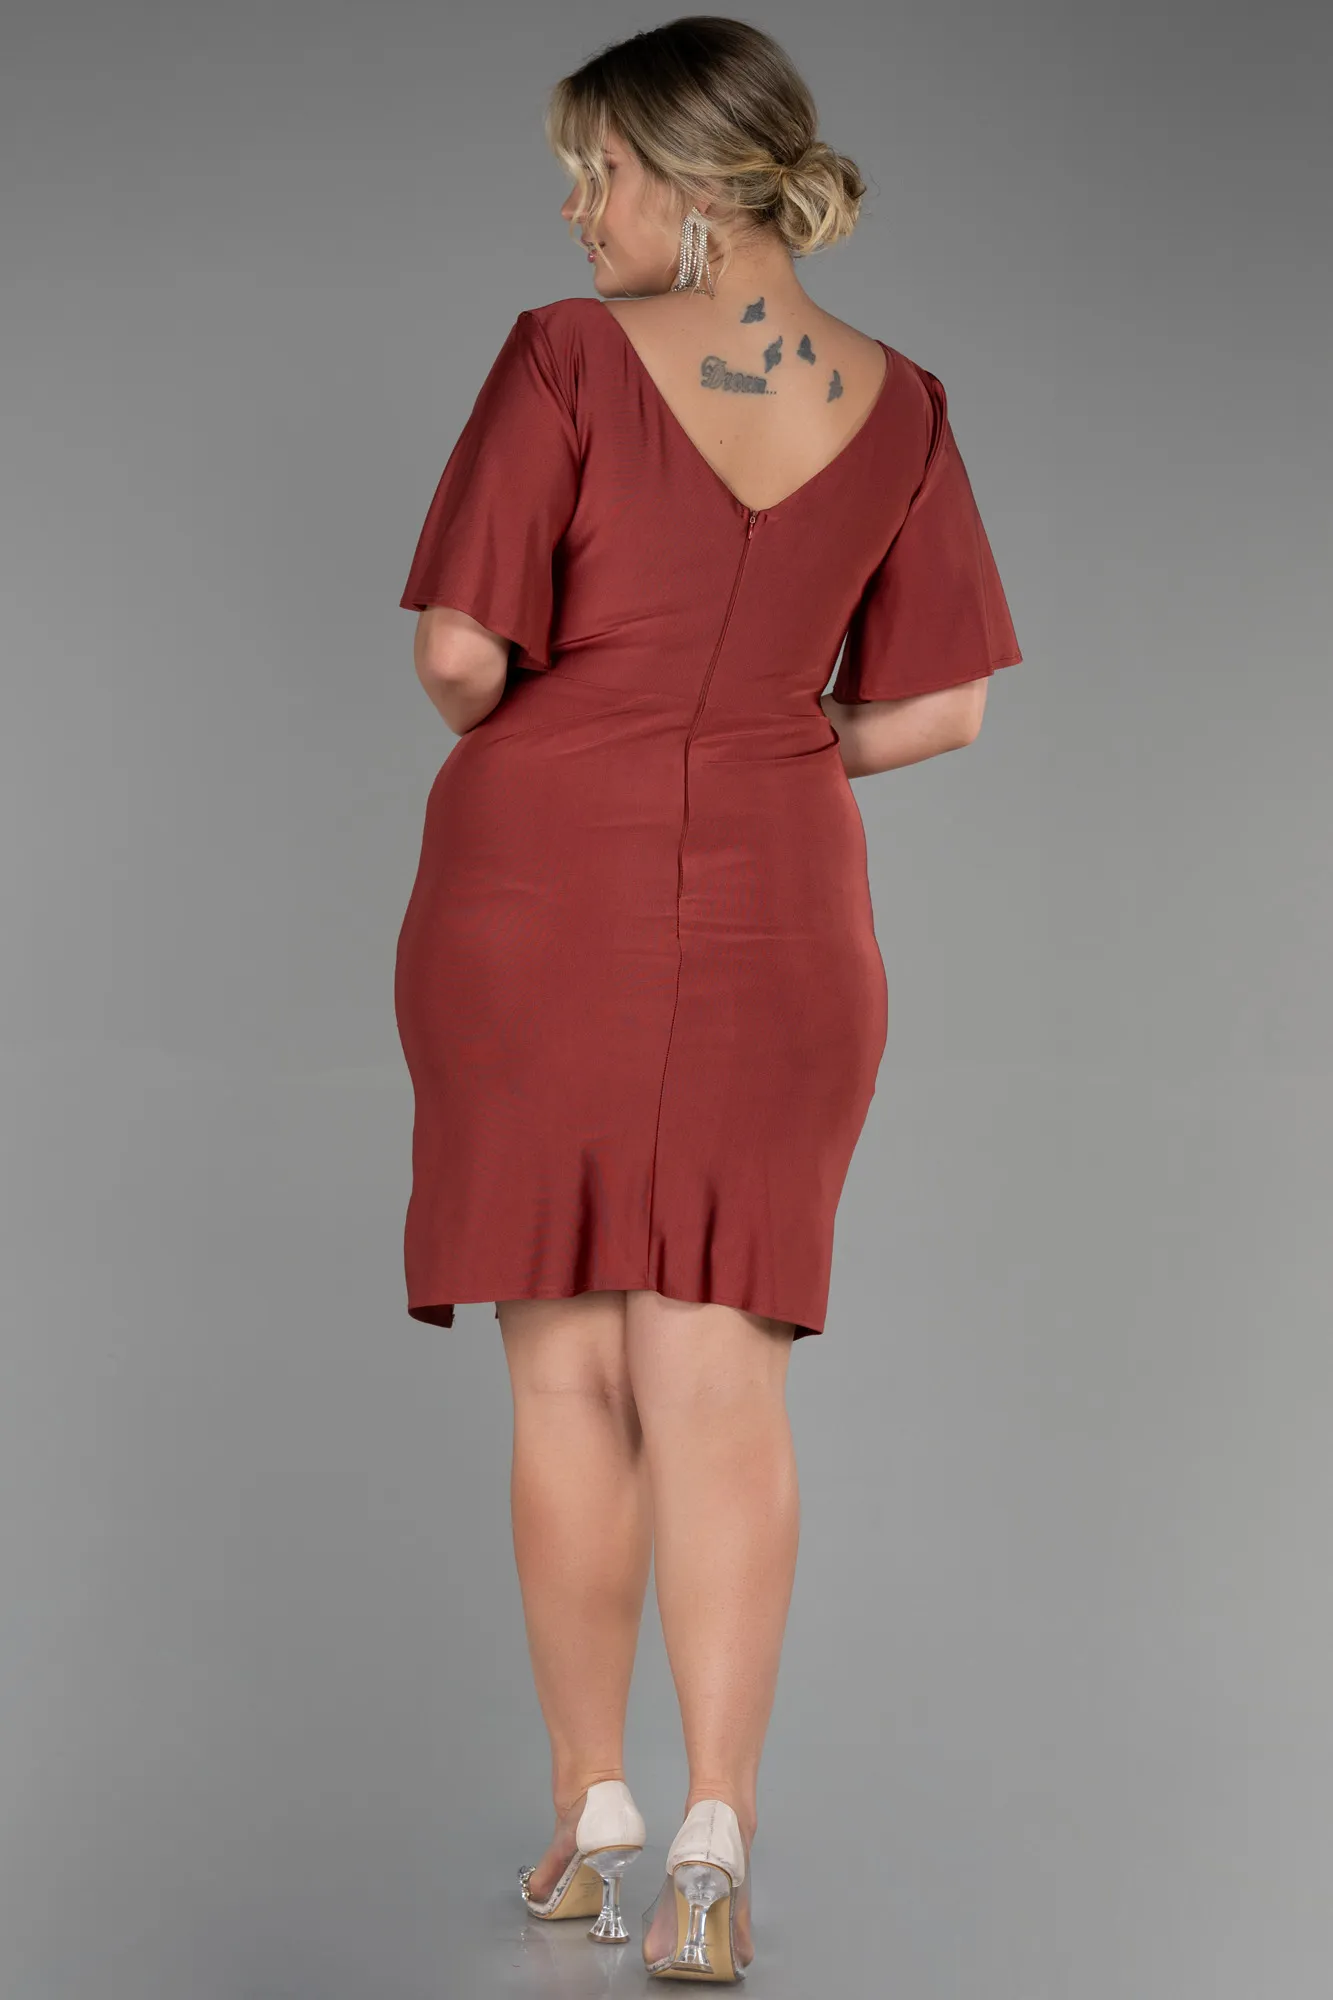 Cinnamon-Short Plus Size Evening Dress ABK1824